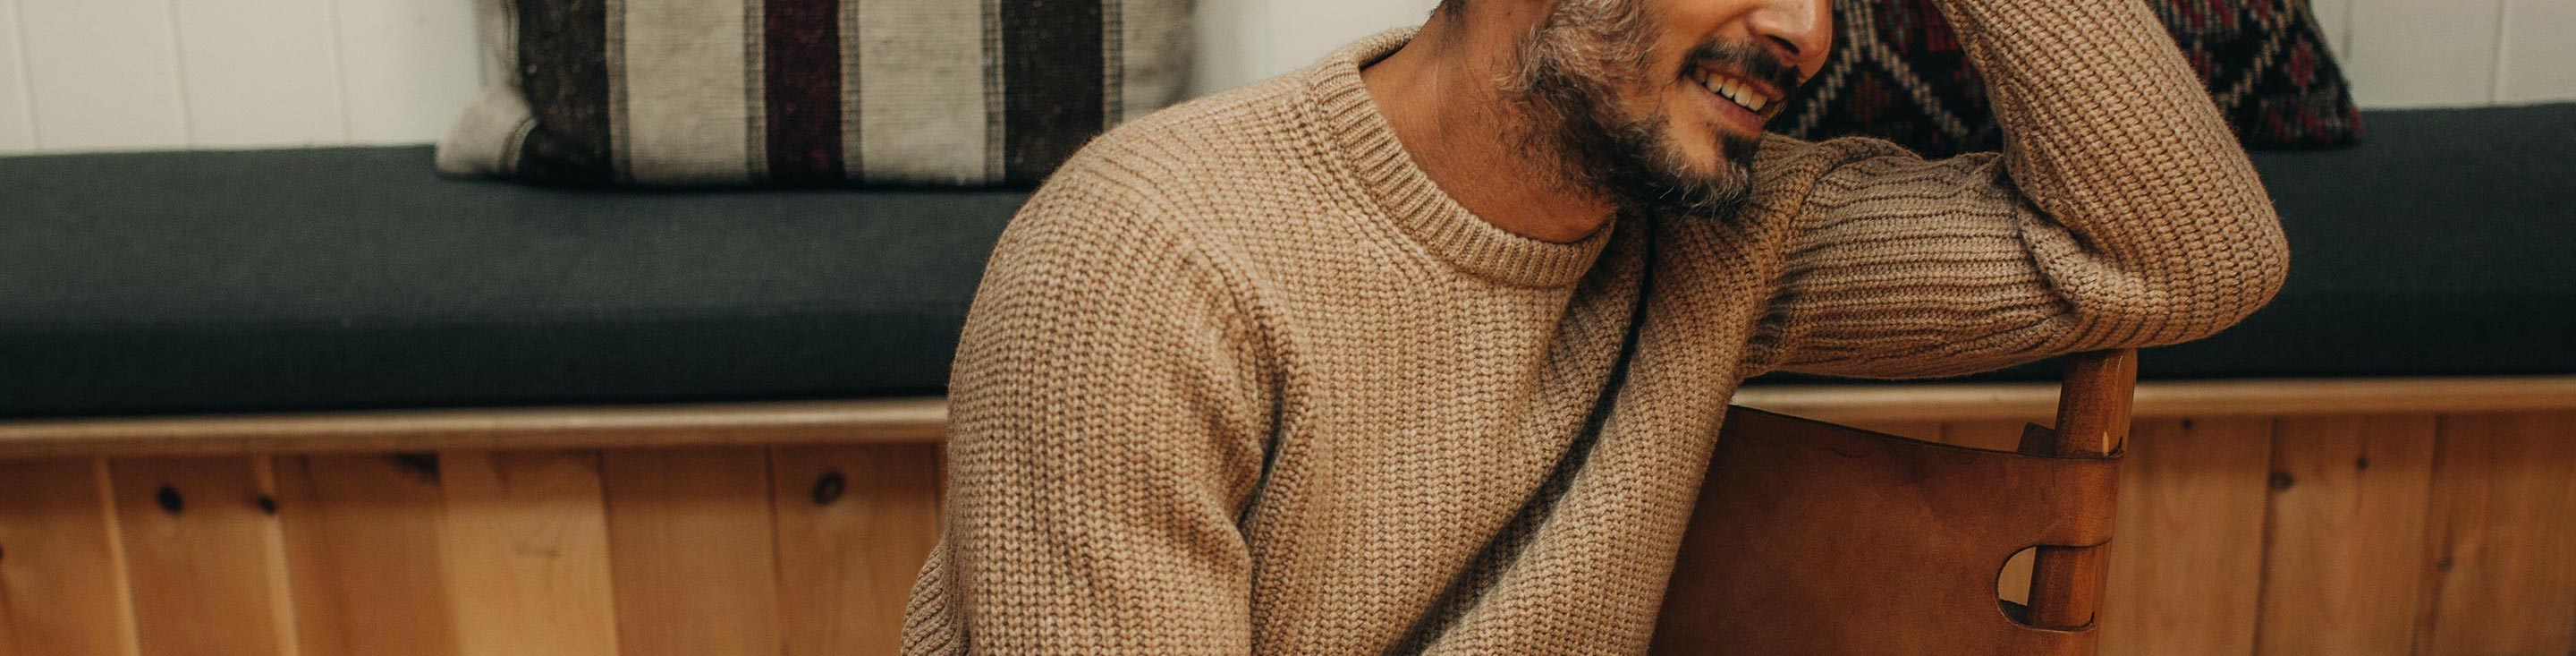 The Fisherman Sweater - Men's Merino Wool Sweaters